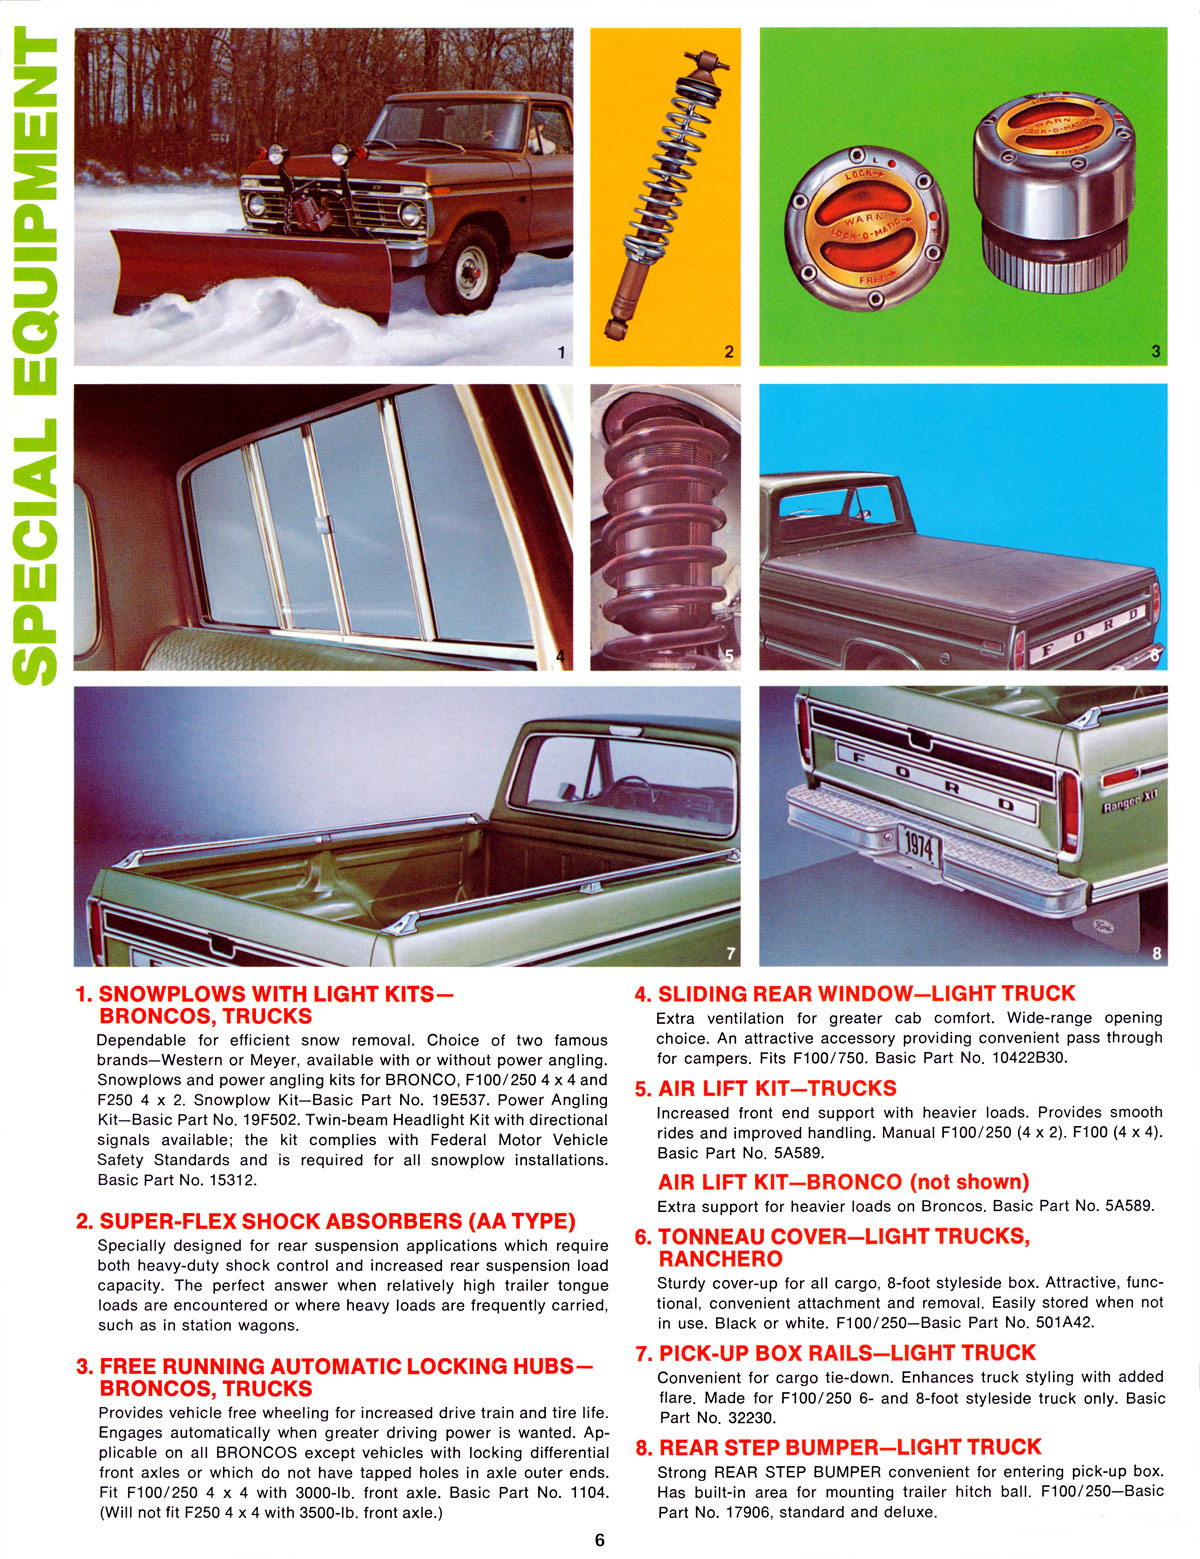 n_1974 Ford Triuck Accessories-06.jpg